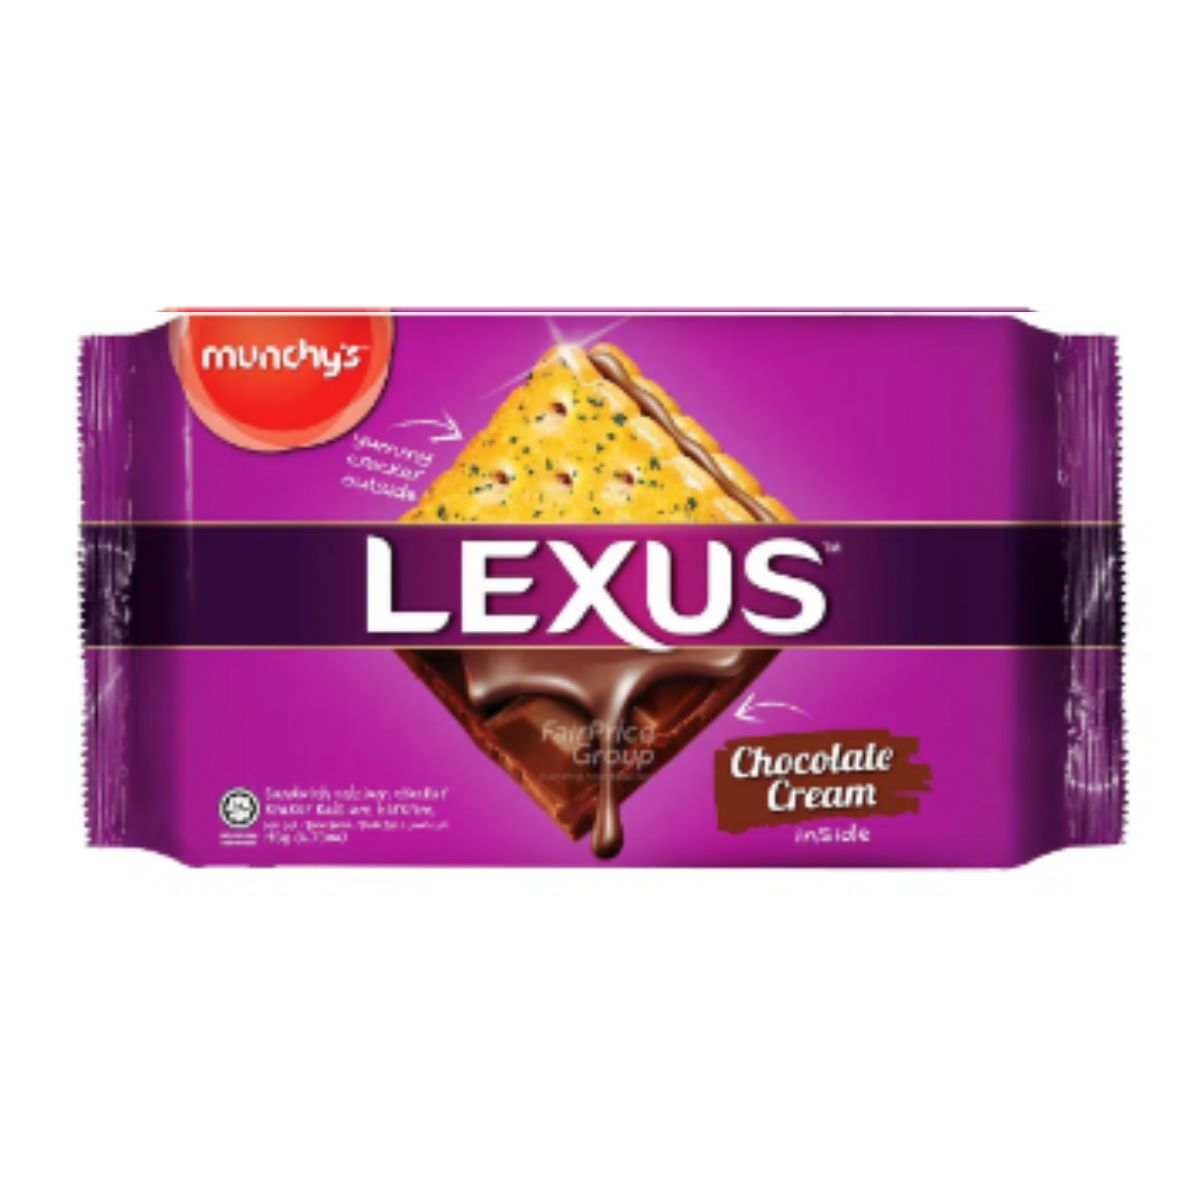 Munchy's Lexus - Chocolate Cream Inside Cookies - 189g